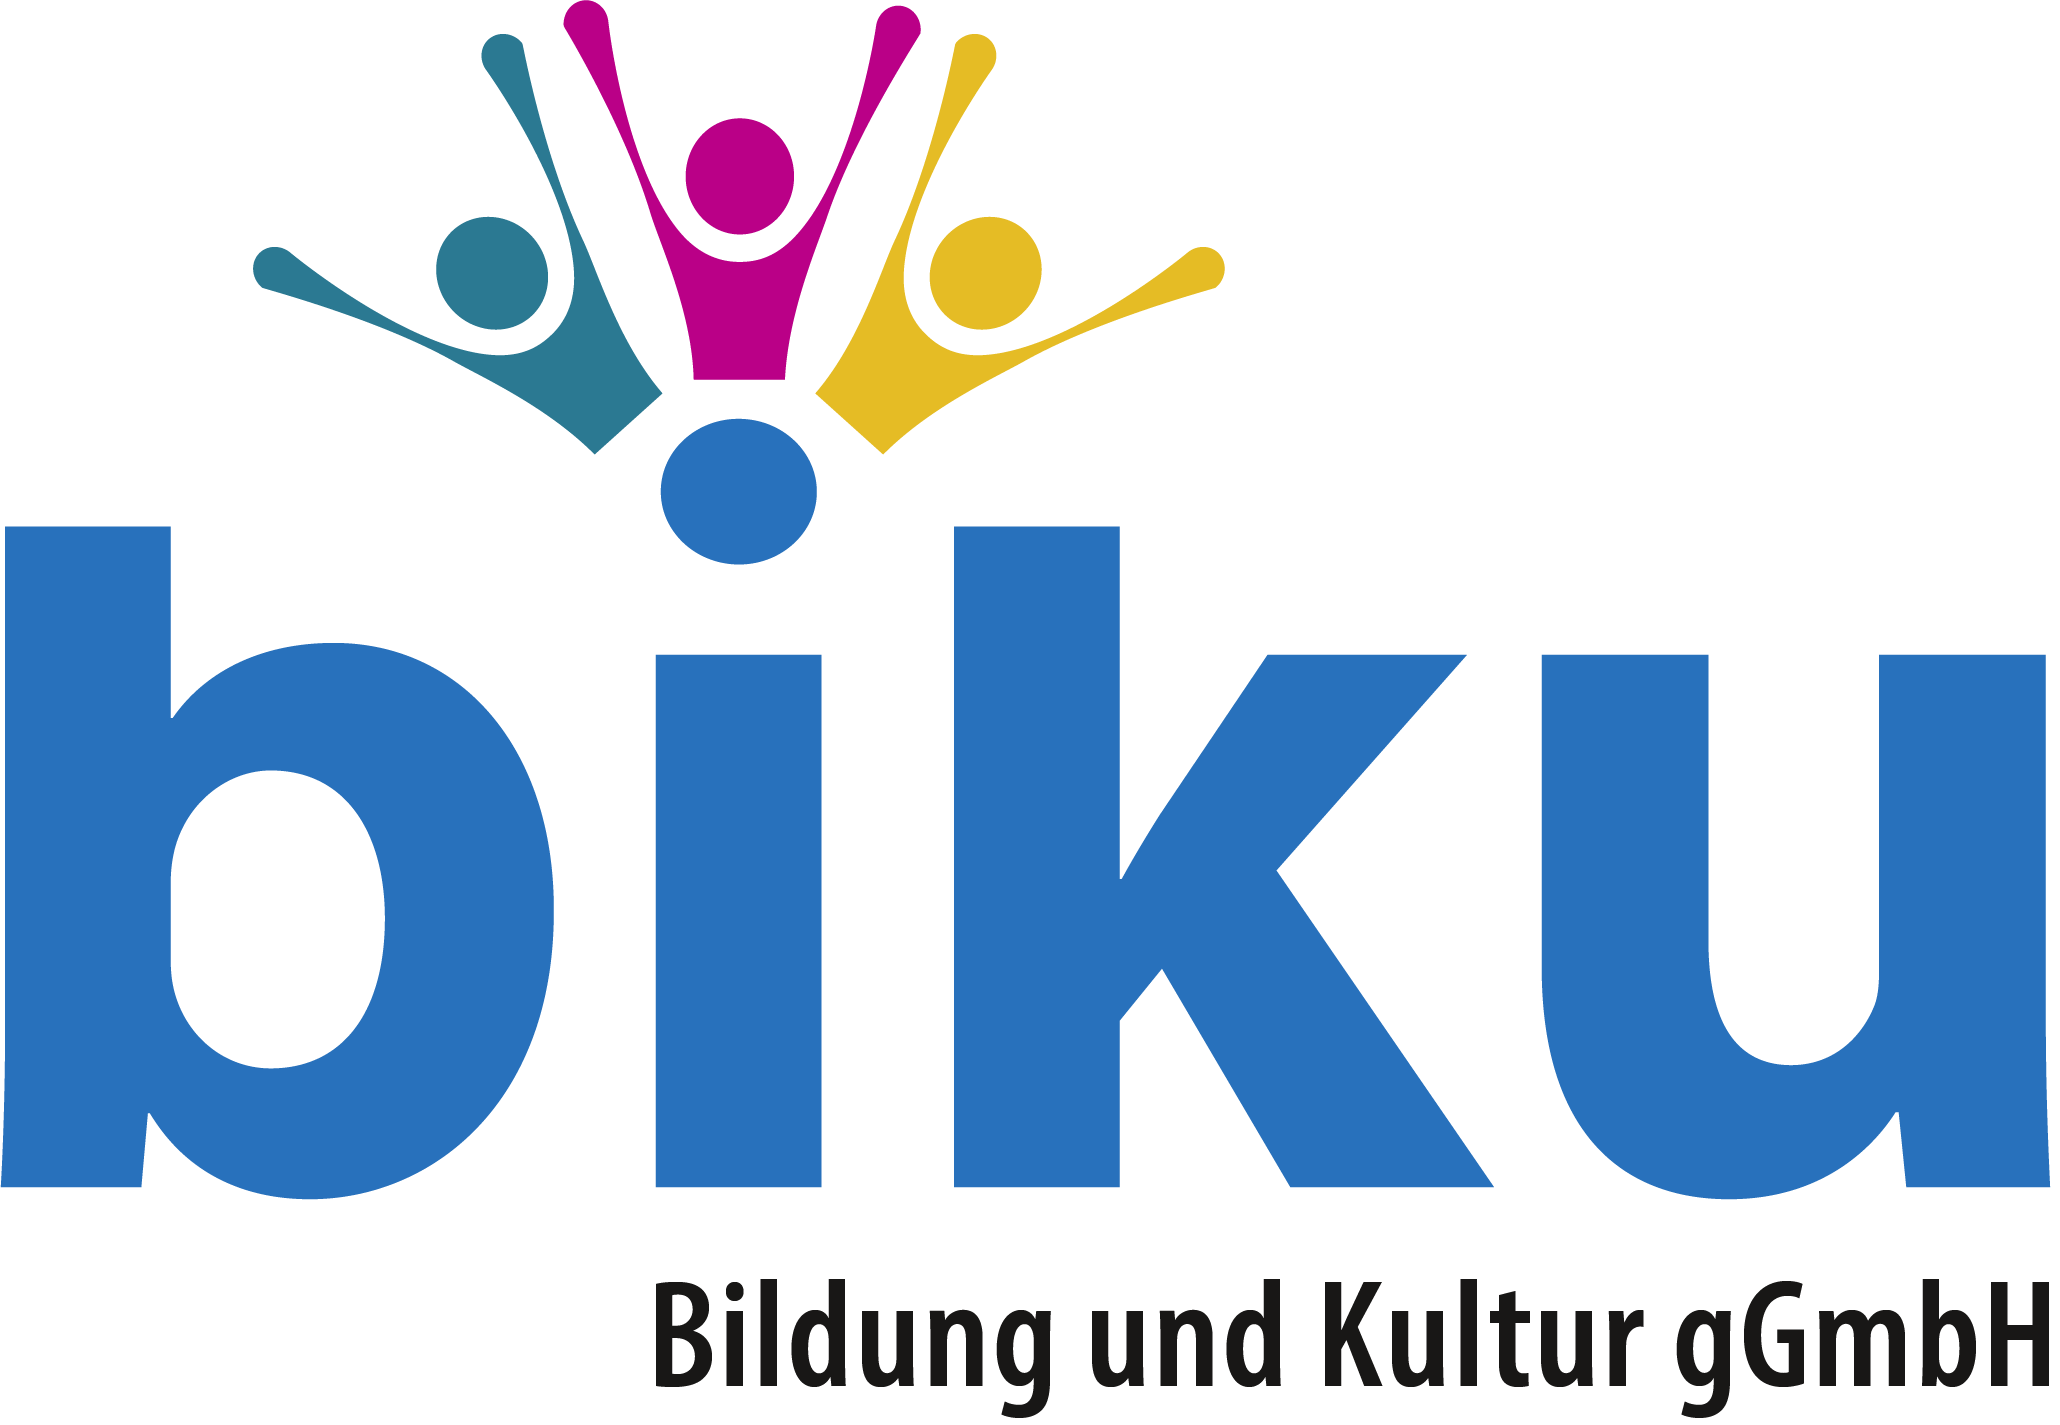 biku - Bildung und Kultur gGmbH